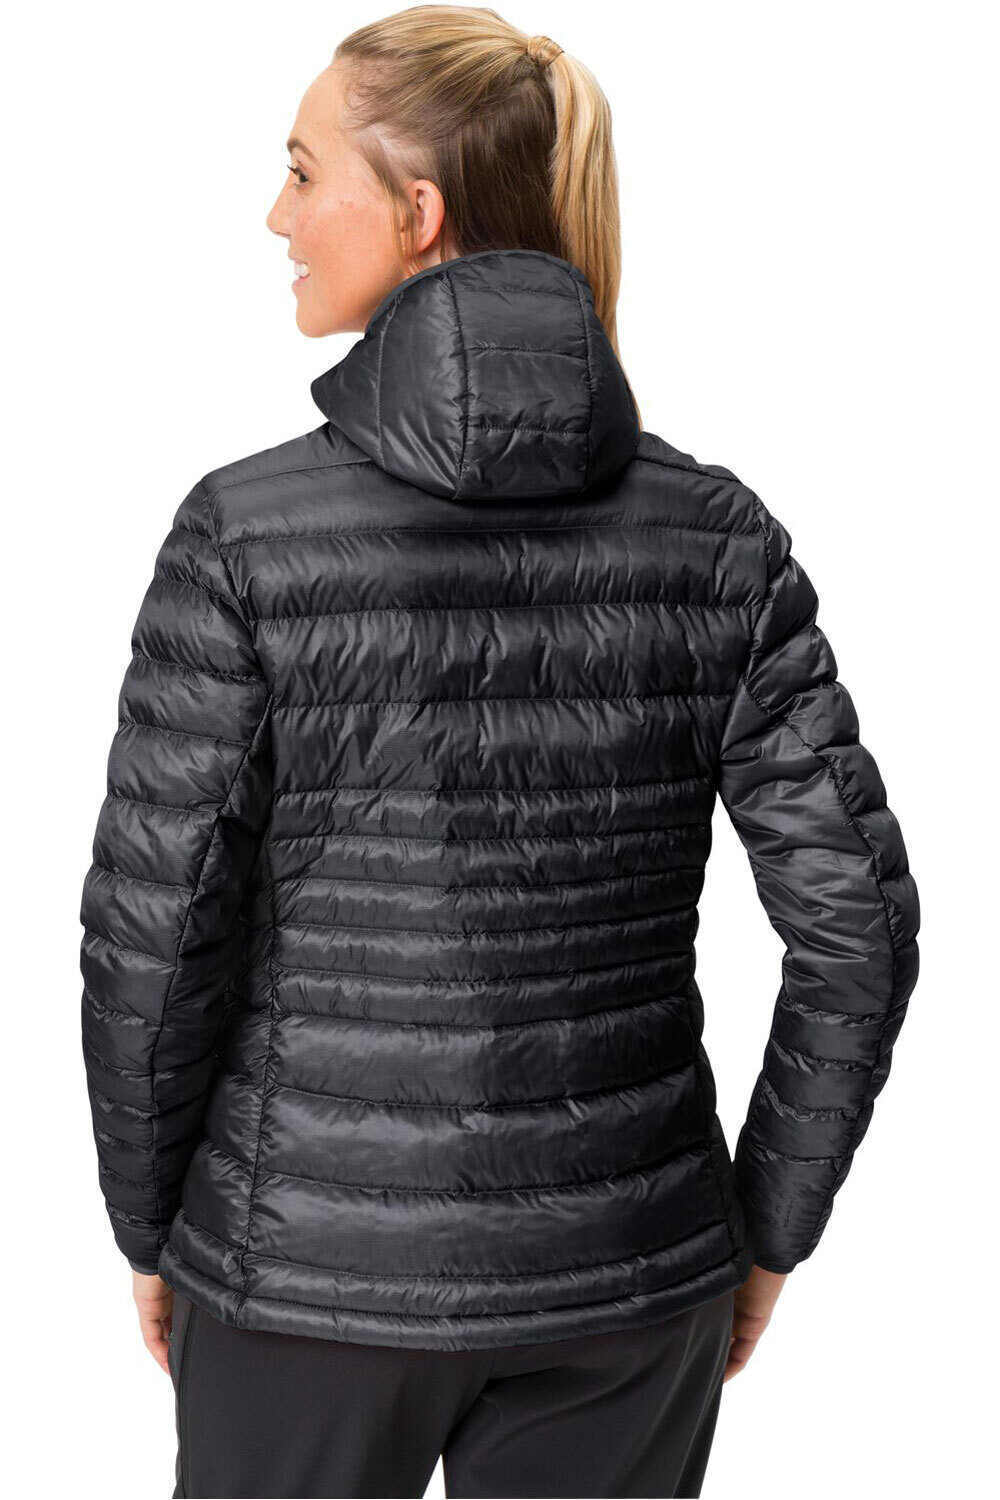 Vaude chaqueta outdoor mujer BATURA HOODED INSULATION vista trasera